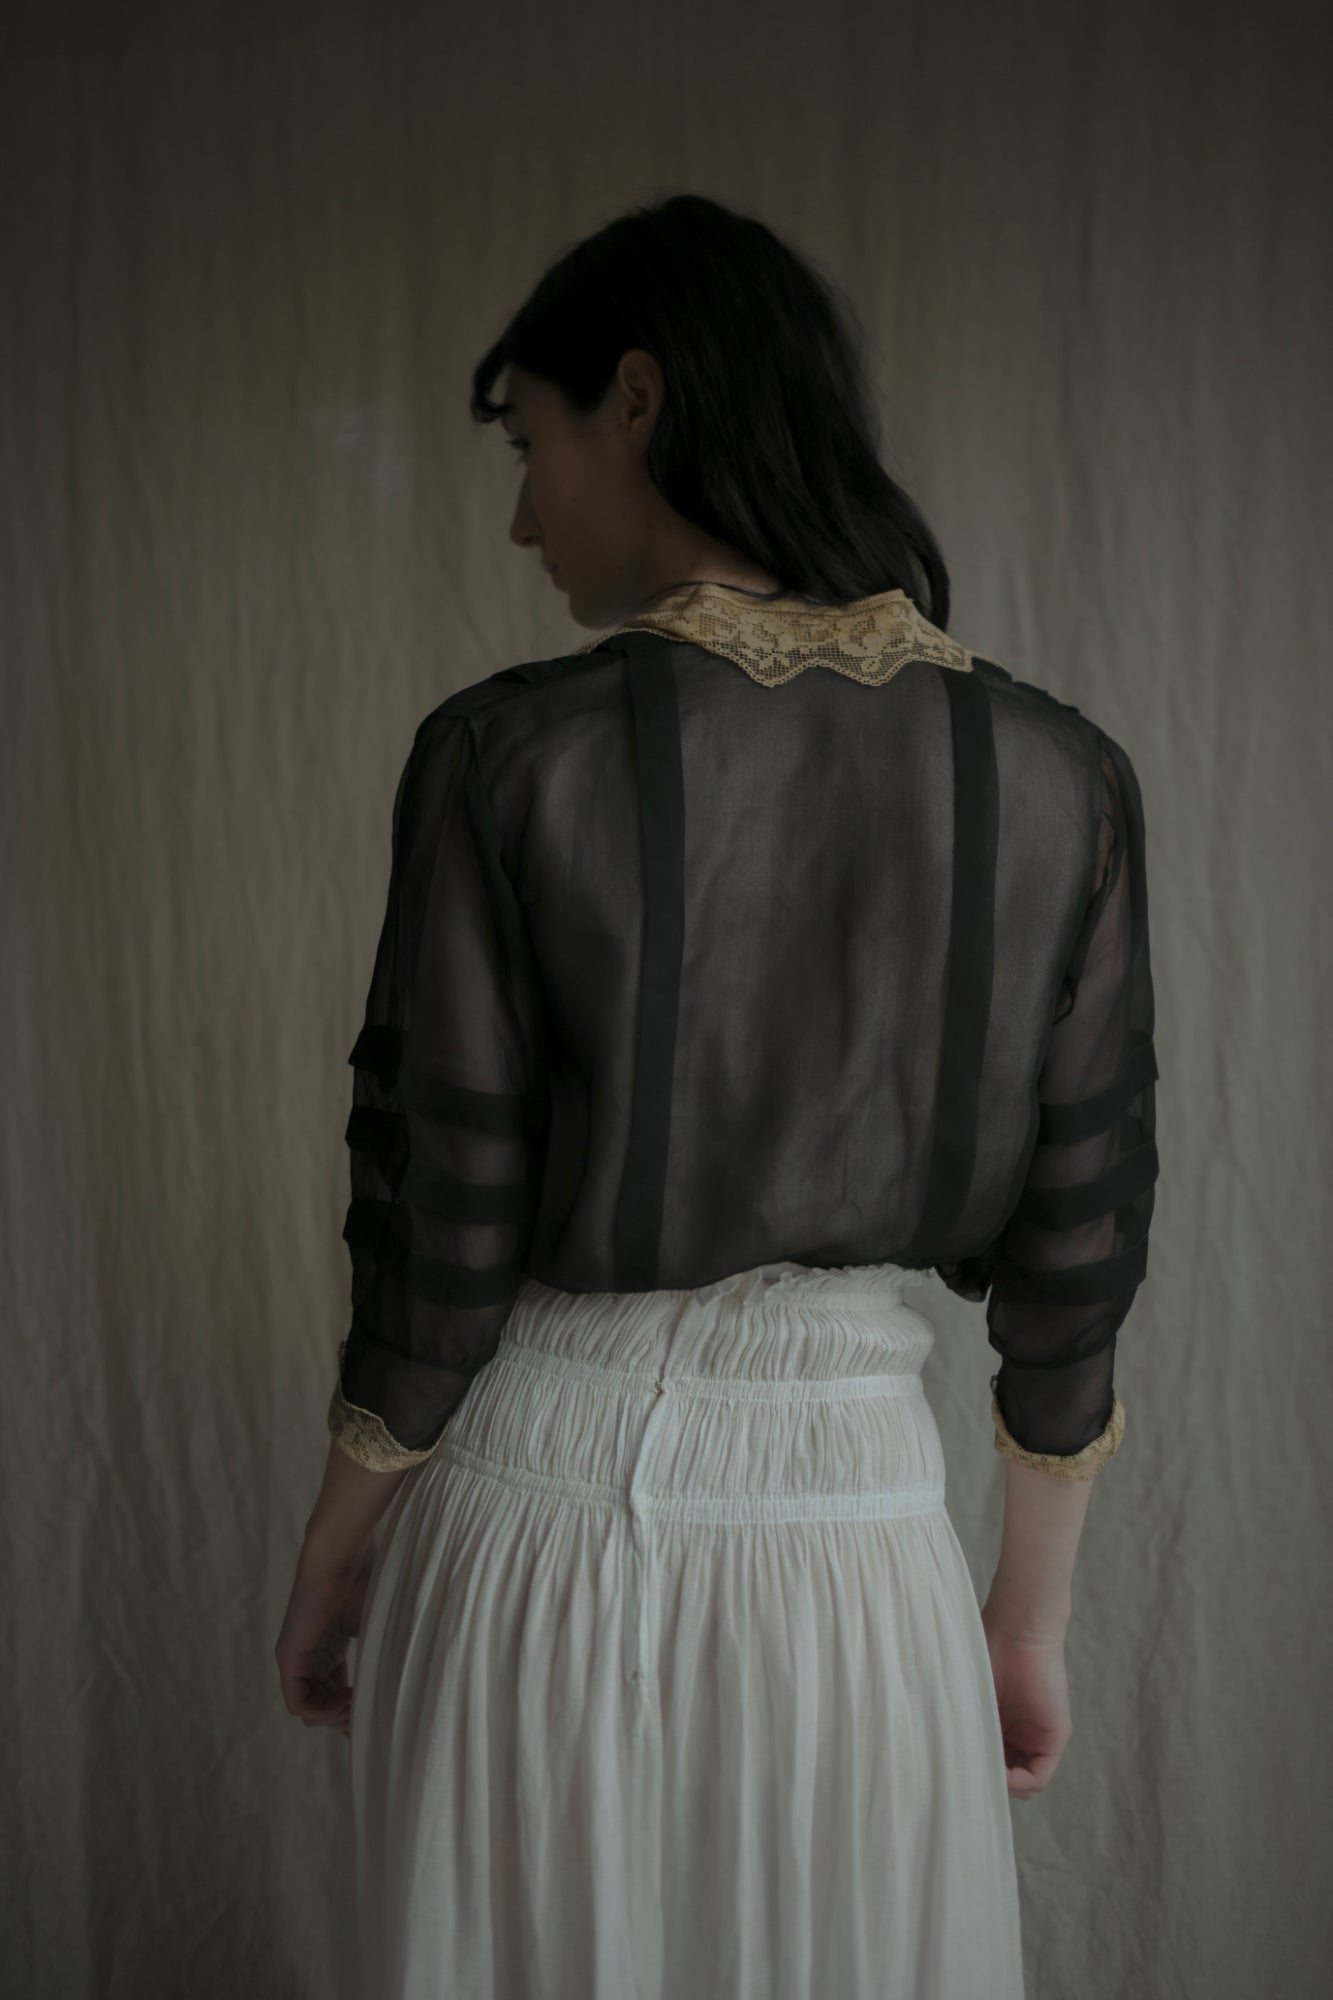 Edwardian silk lace blouse